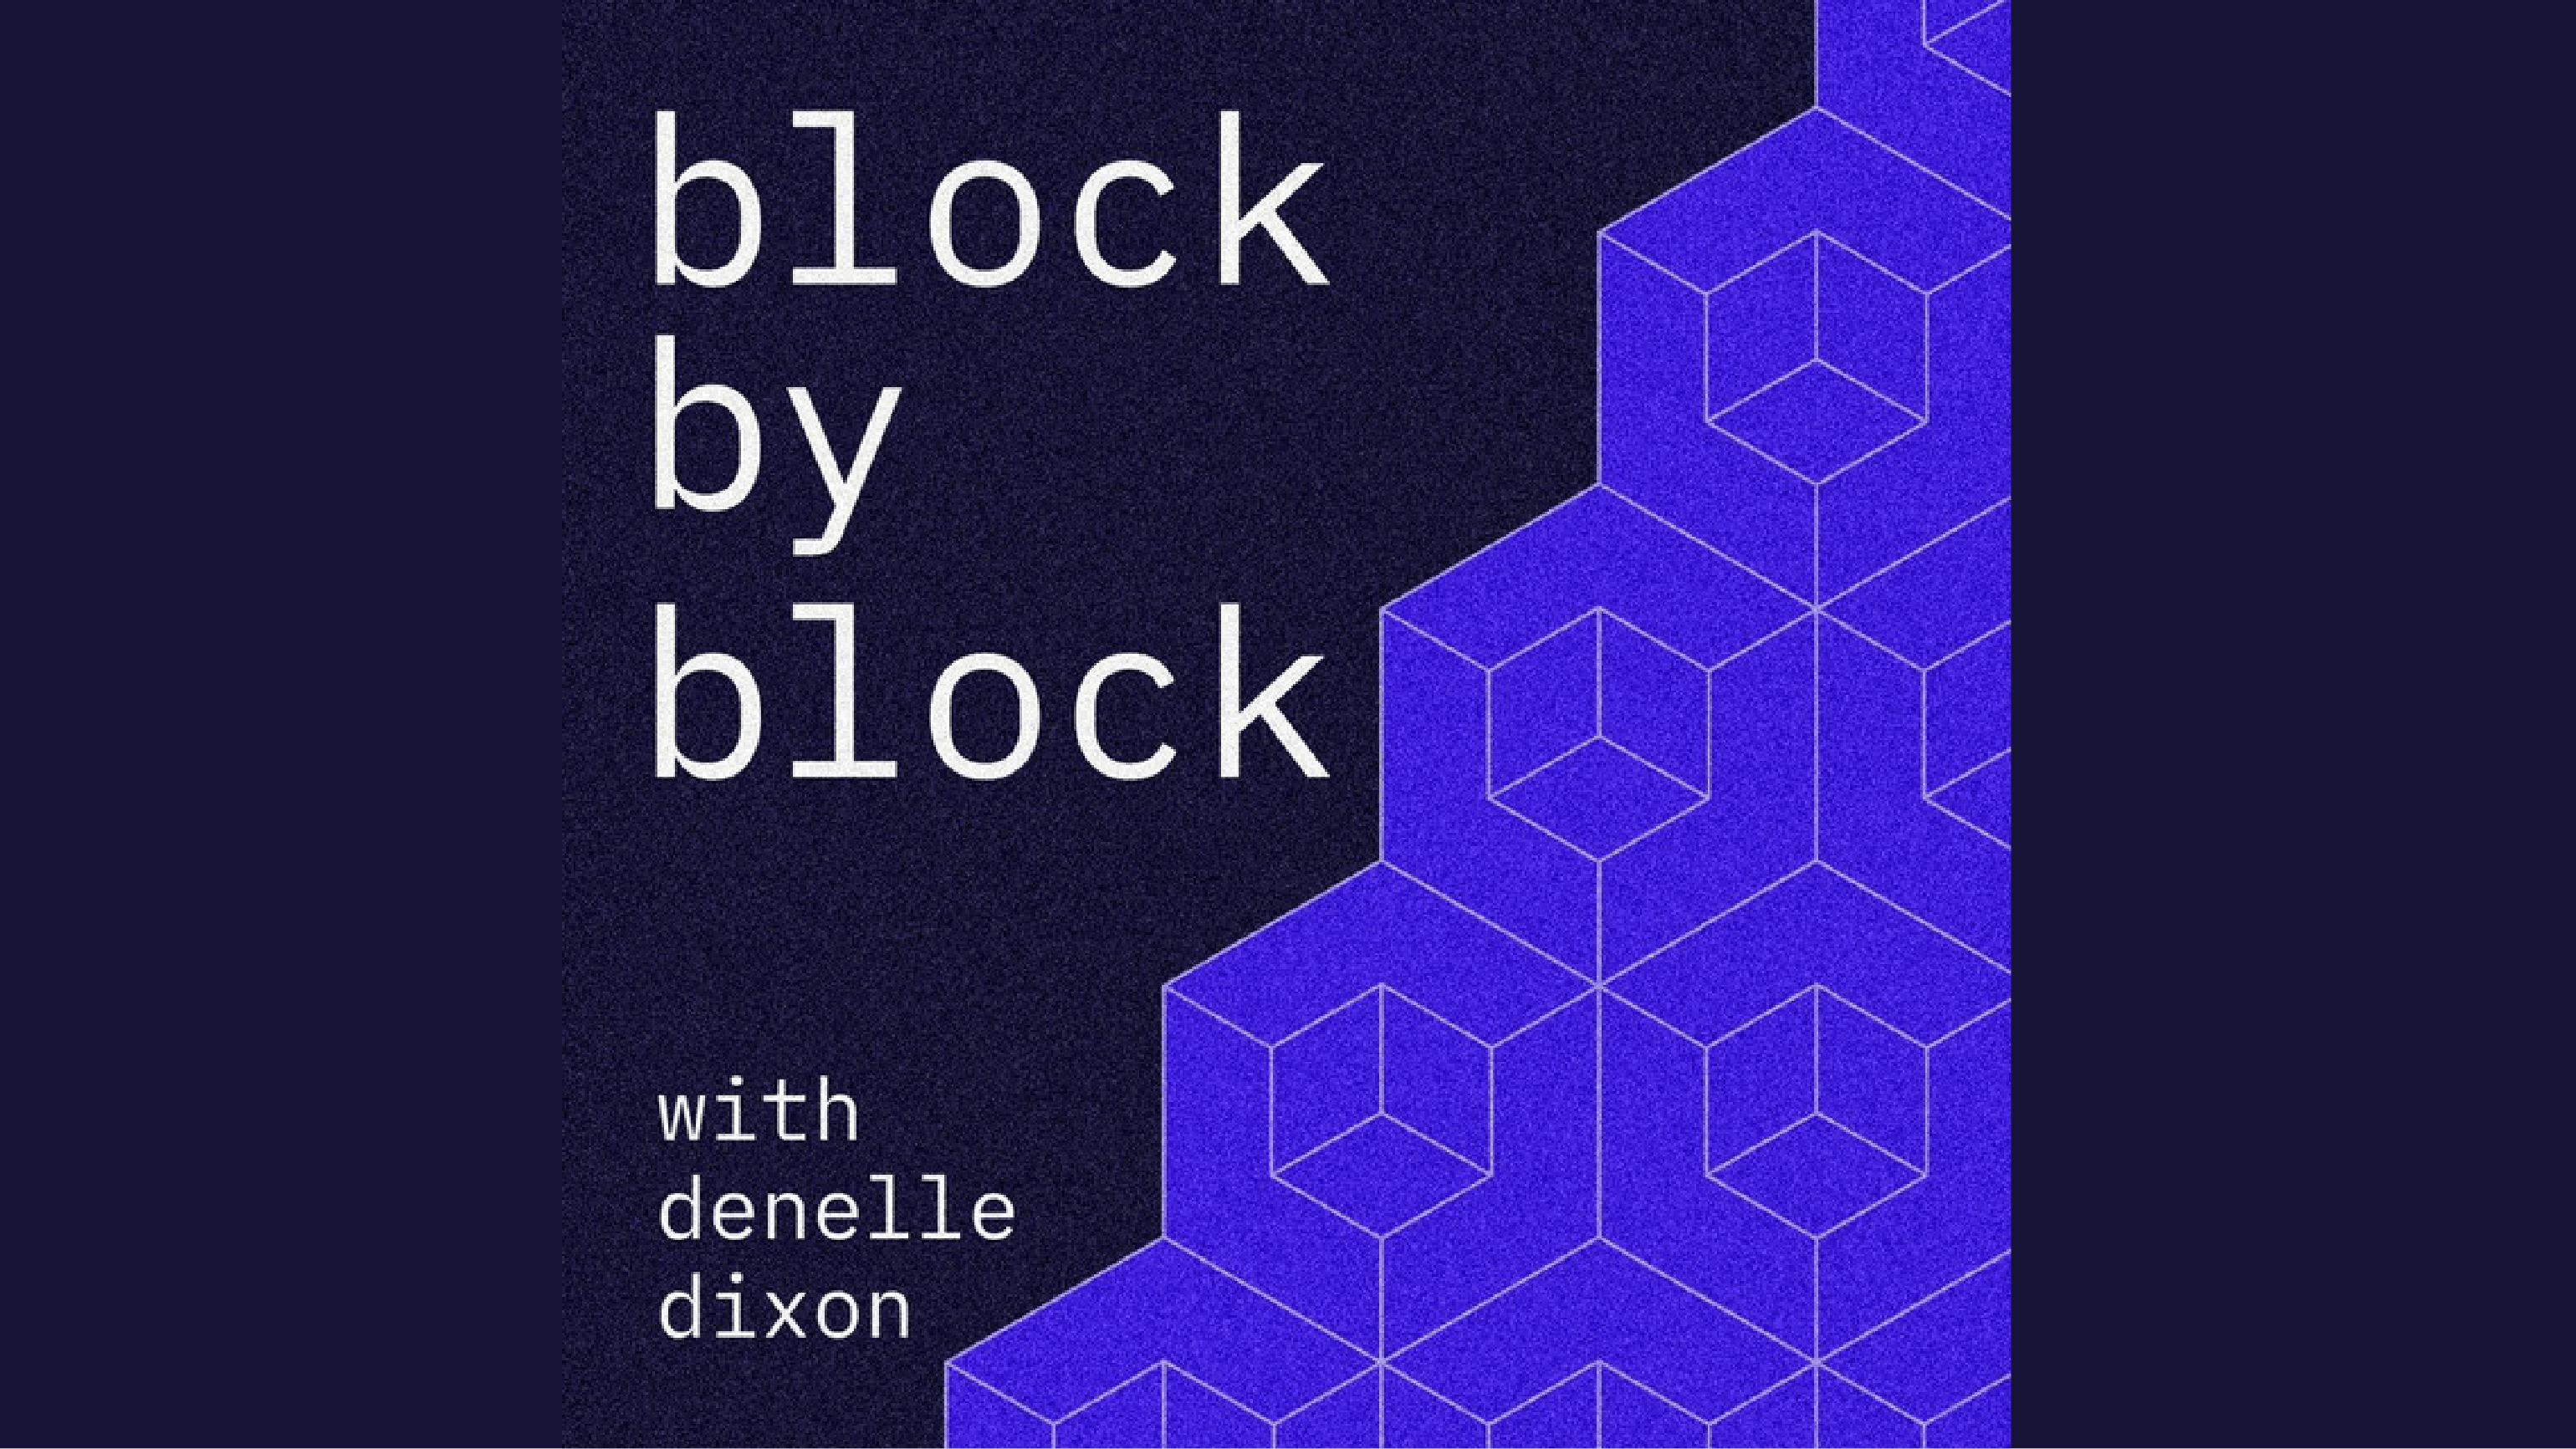 block by block podcast logo